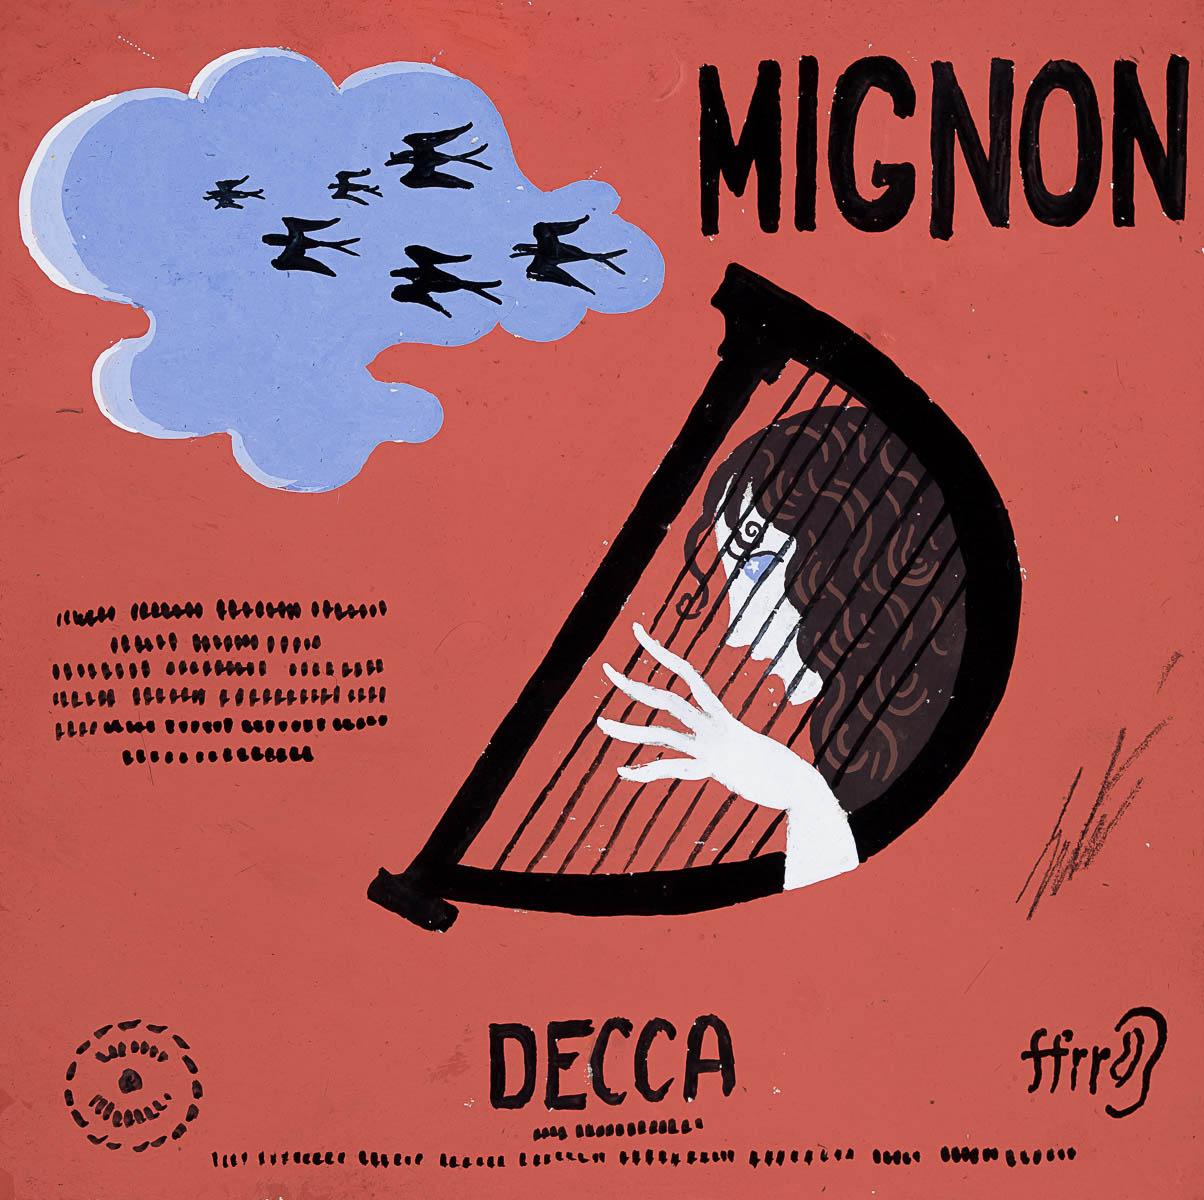 Erté Figurative Art – "Mignon" Decca-Entwurf